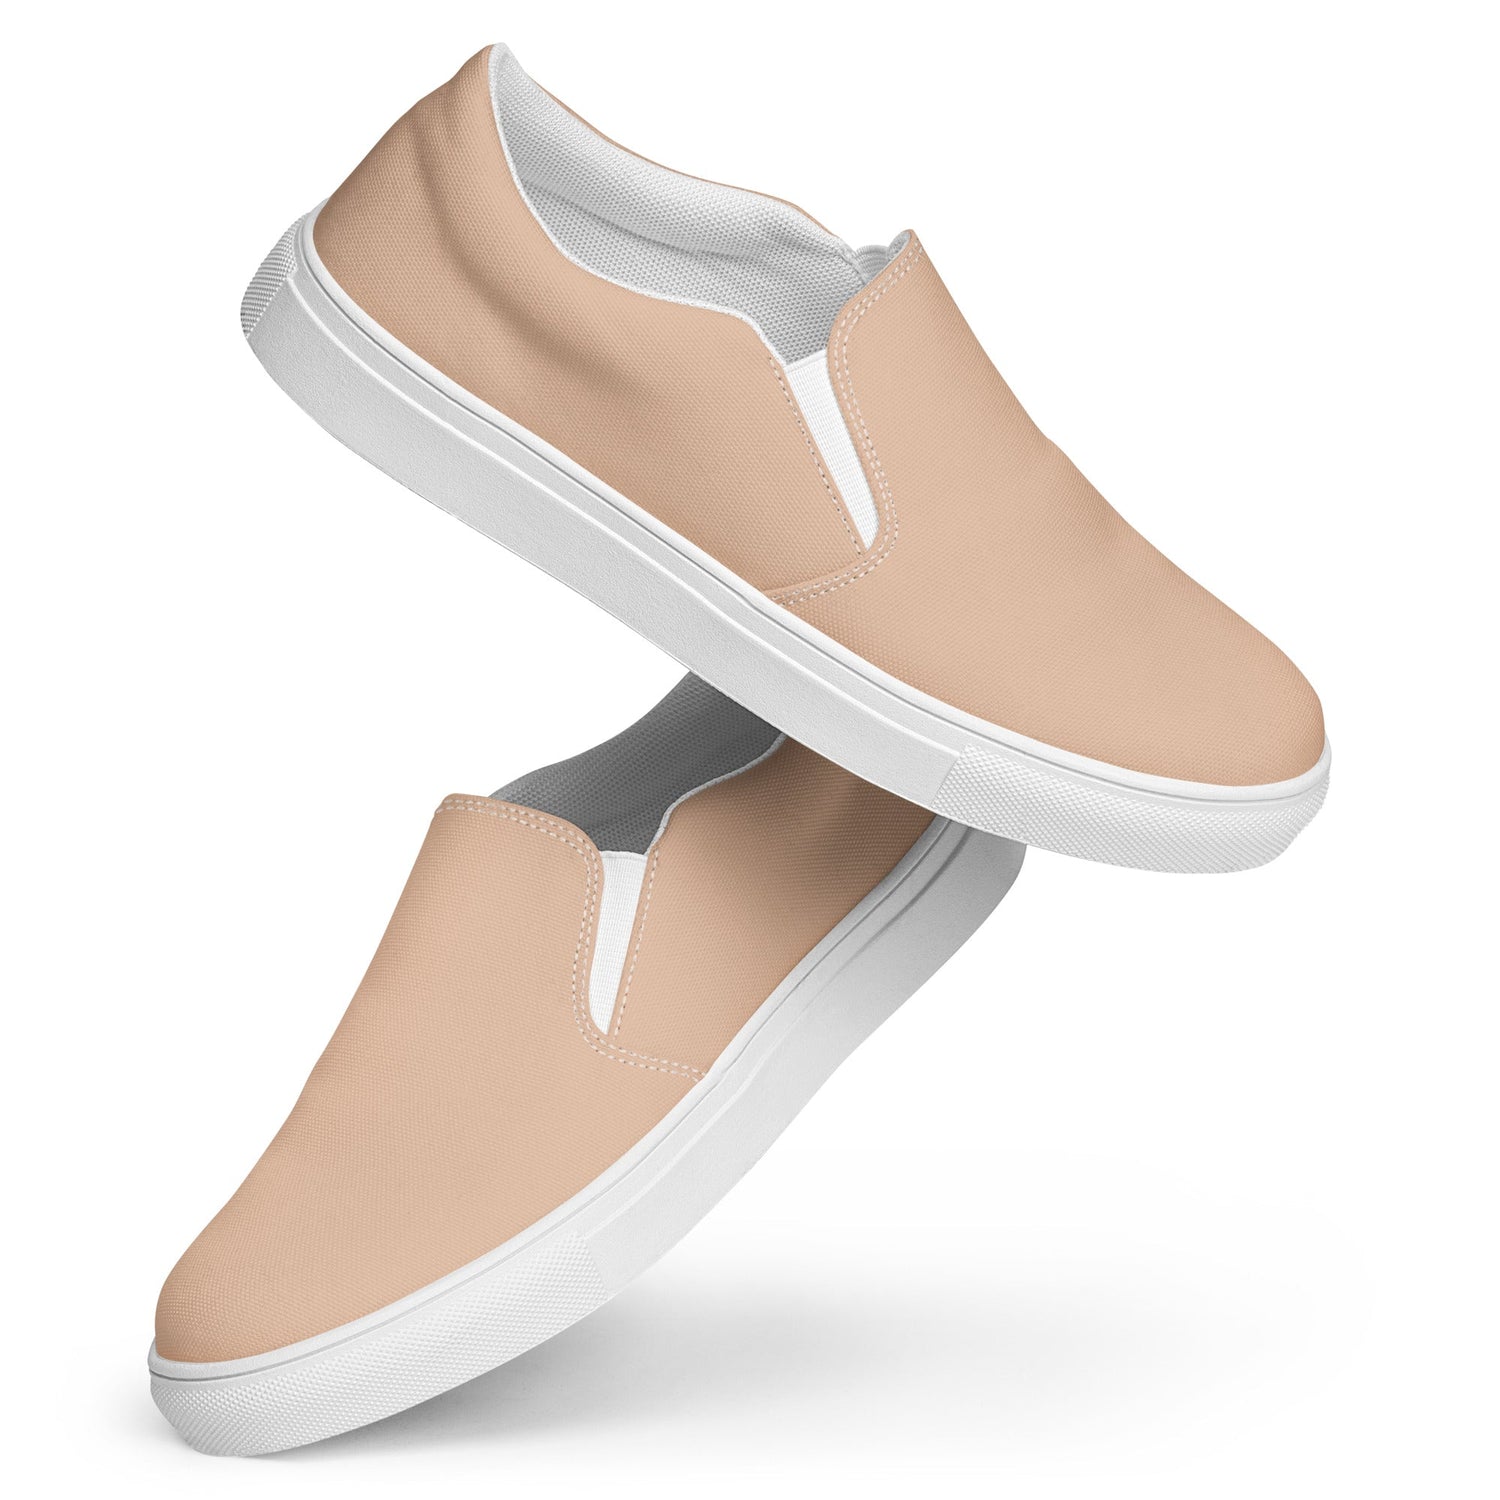 klasneakers Men’s slip-on canvas shoes - Orange Cream